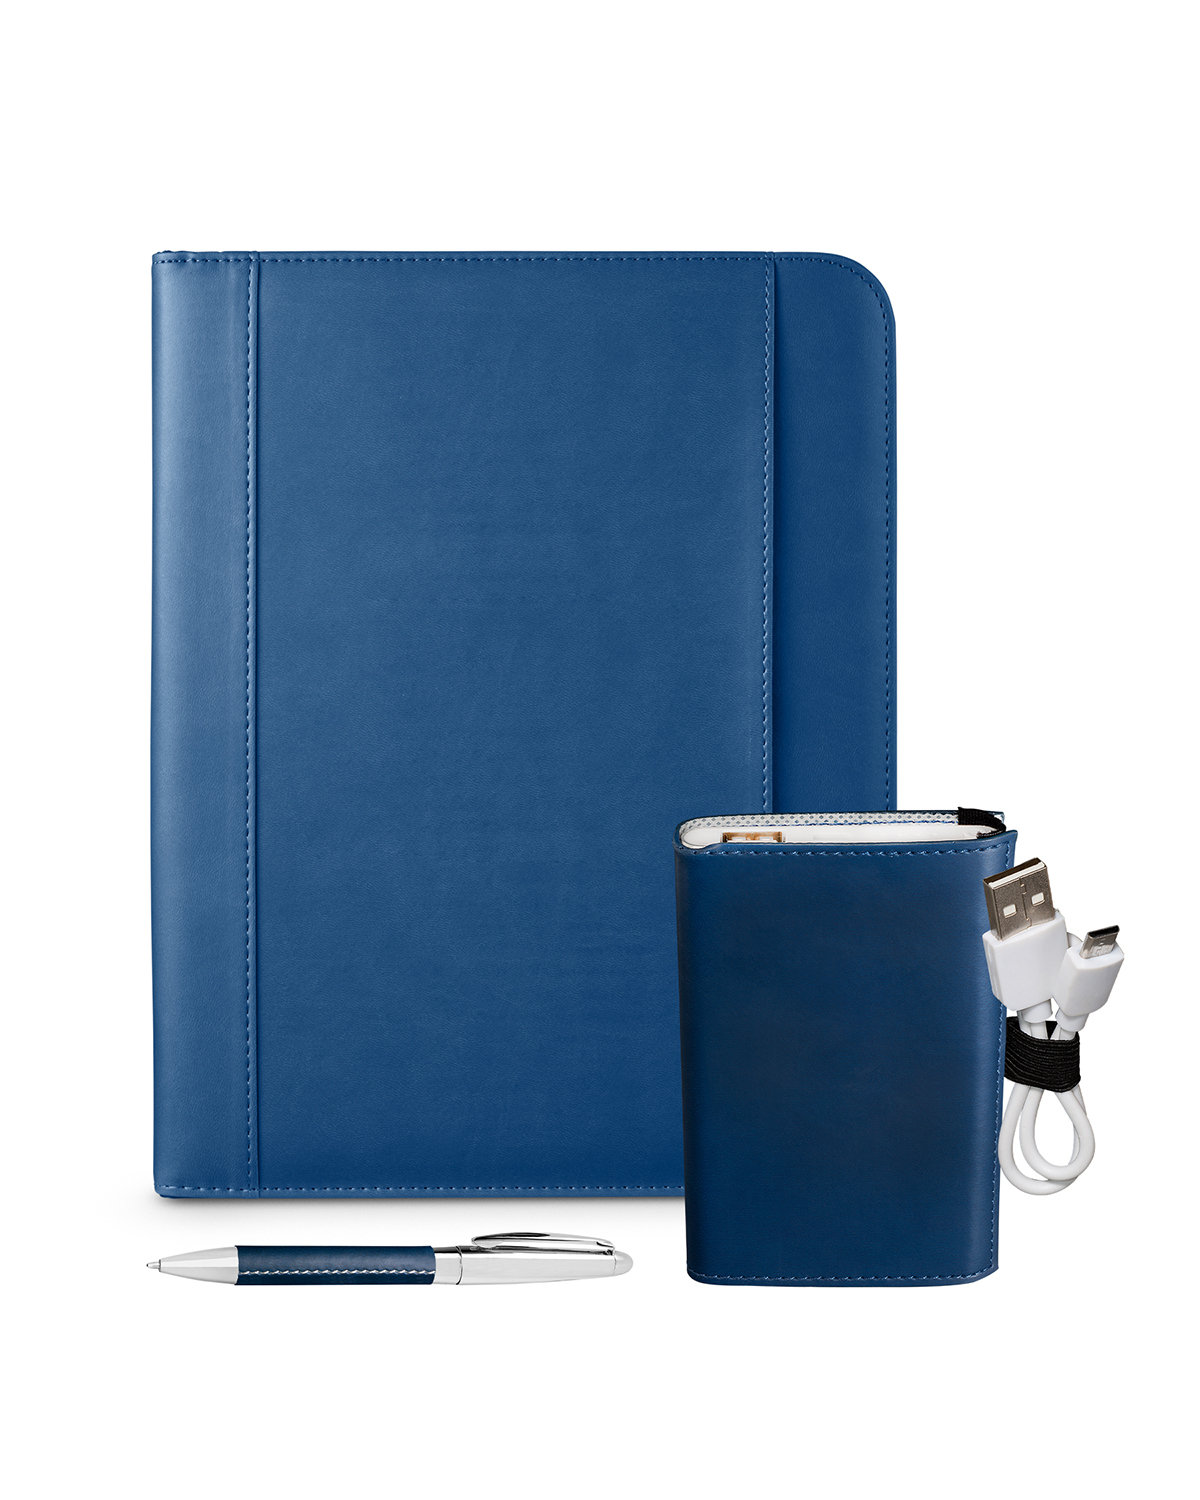 Leeman Tuscany™ Mobile Portfolio Power Bank And Pen Set navy blue 